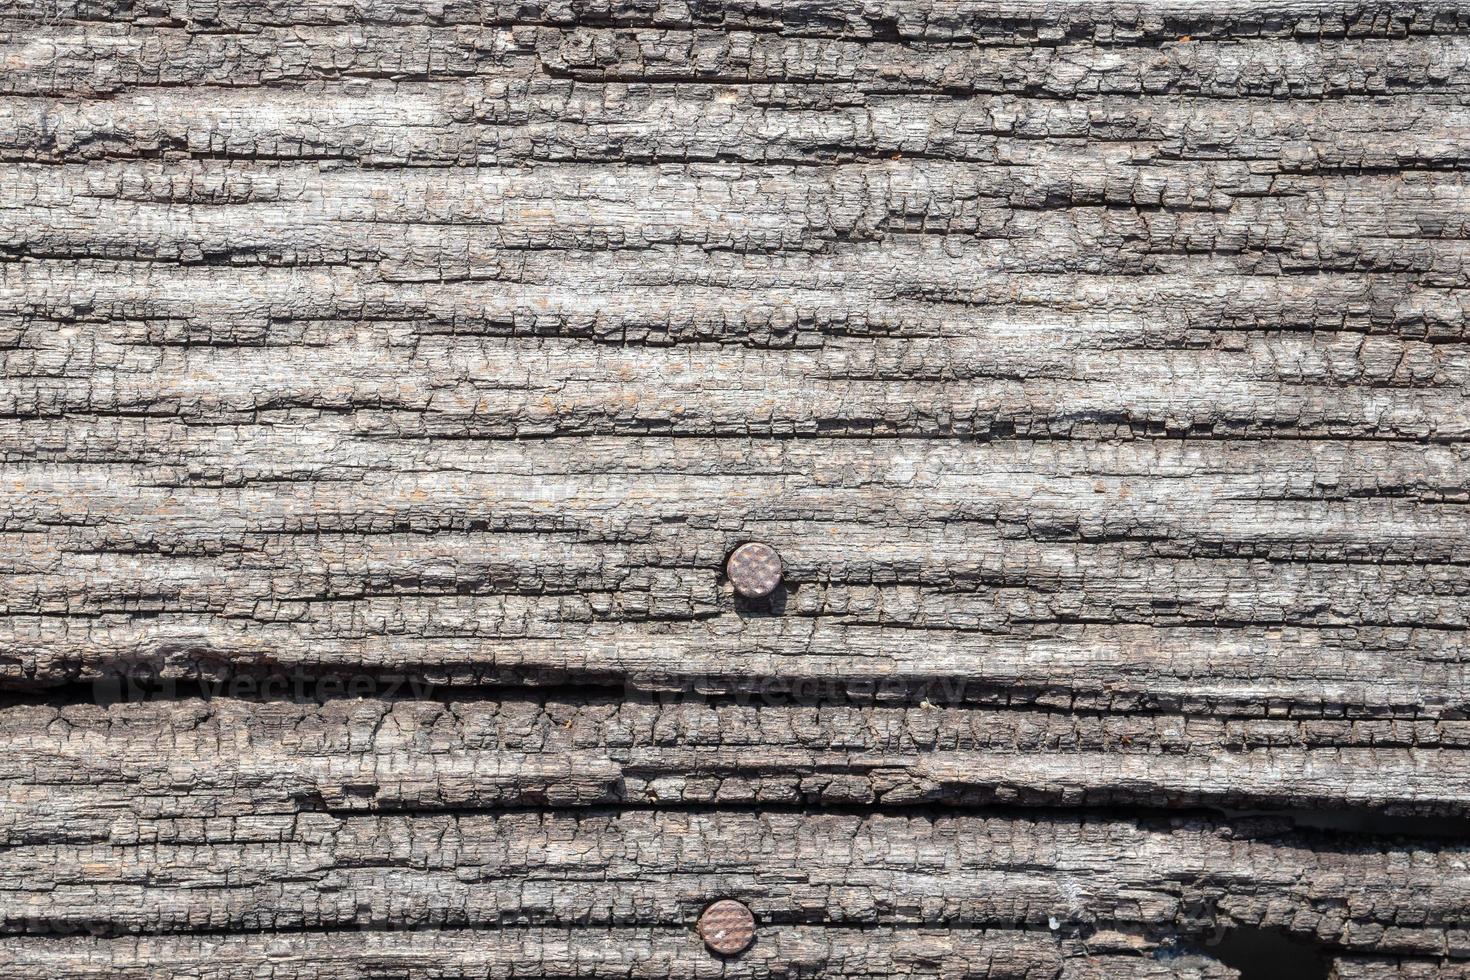 gammal rustik trä textur bakgrund foto